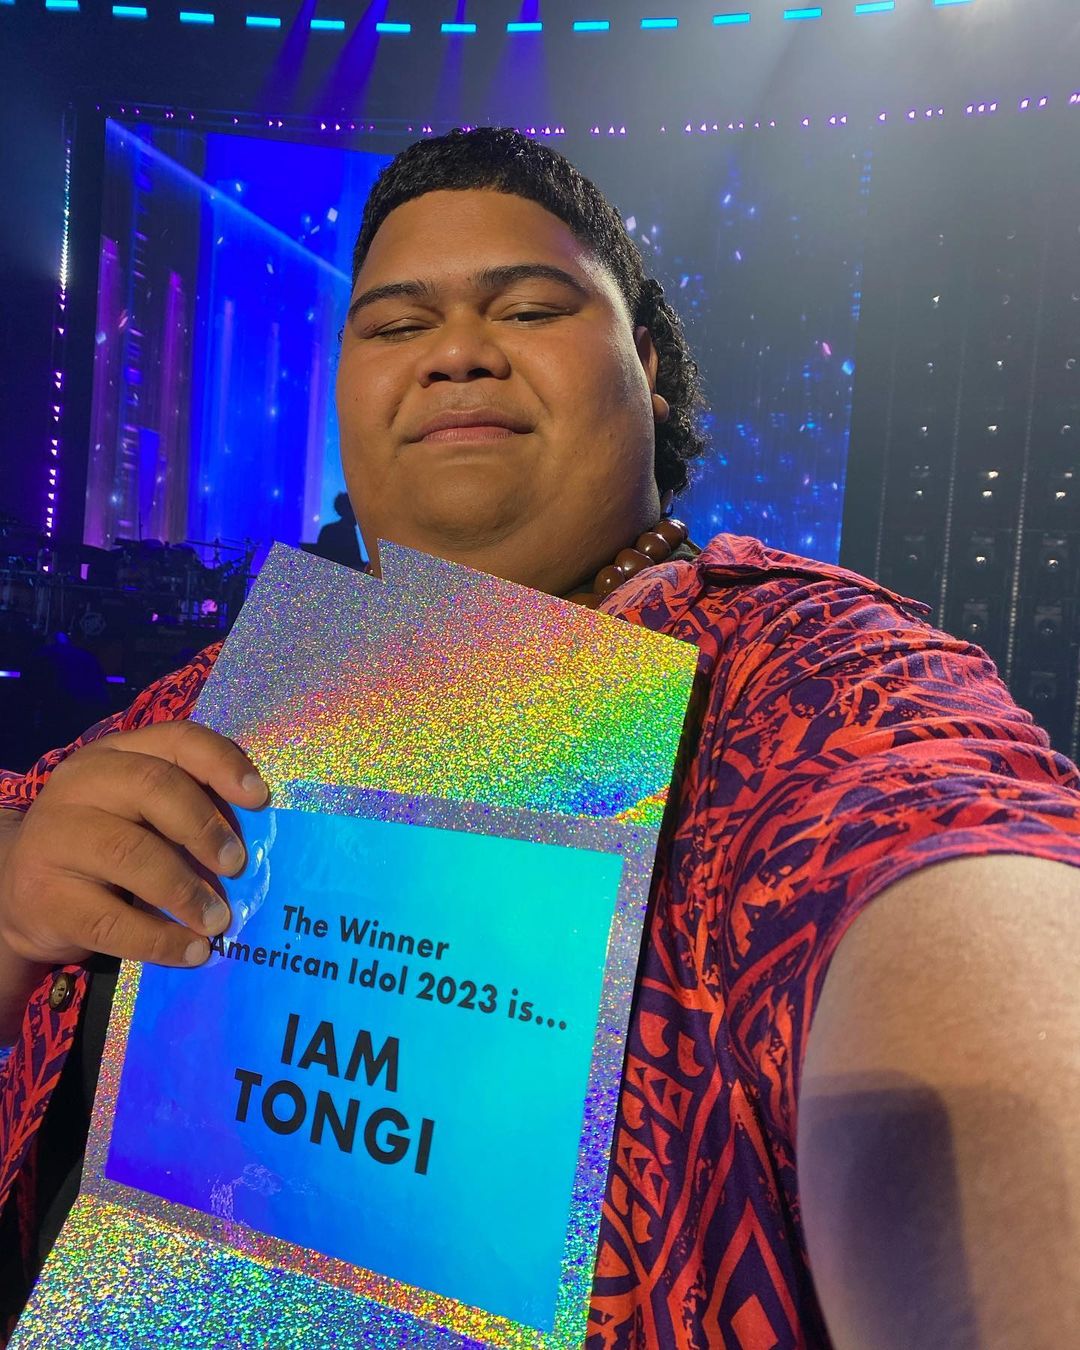 Iam Tongi crowned as American Idol 2023 champion